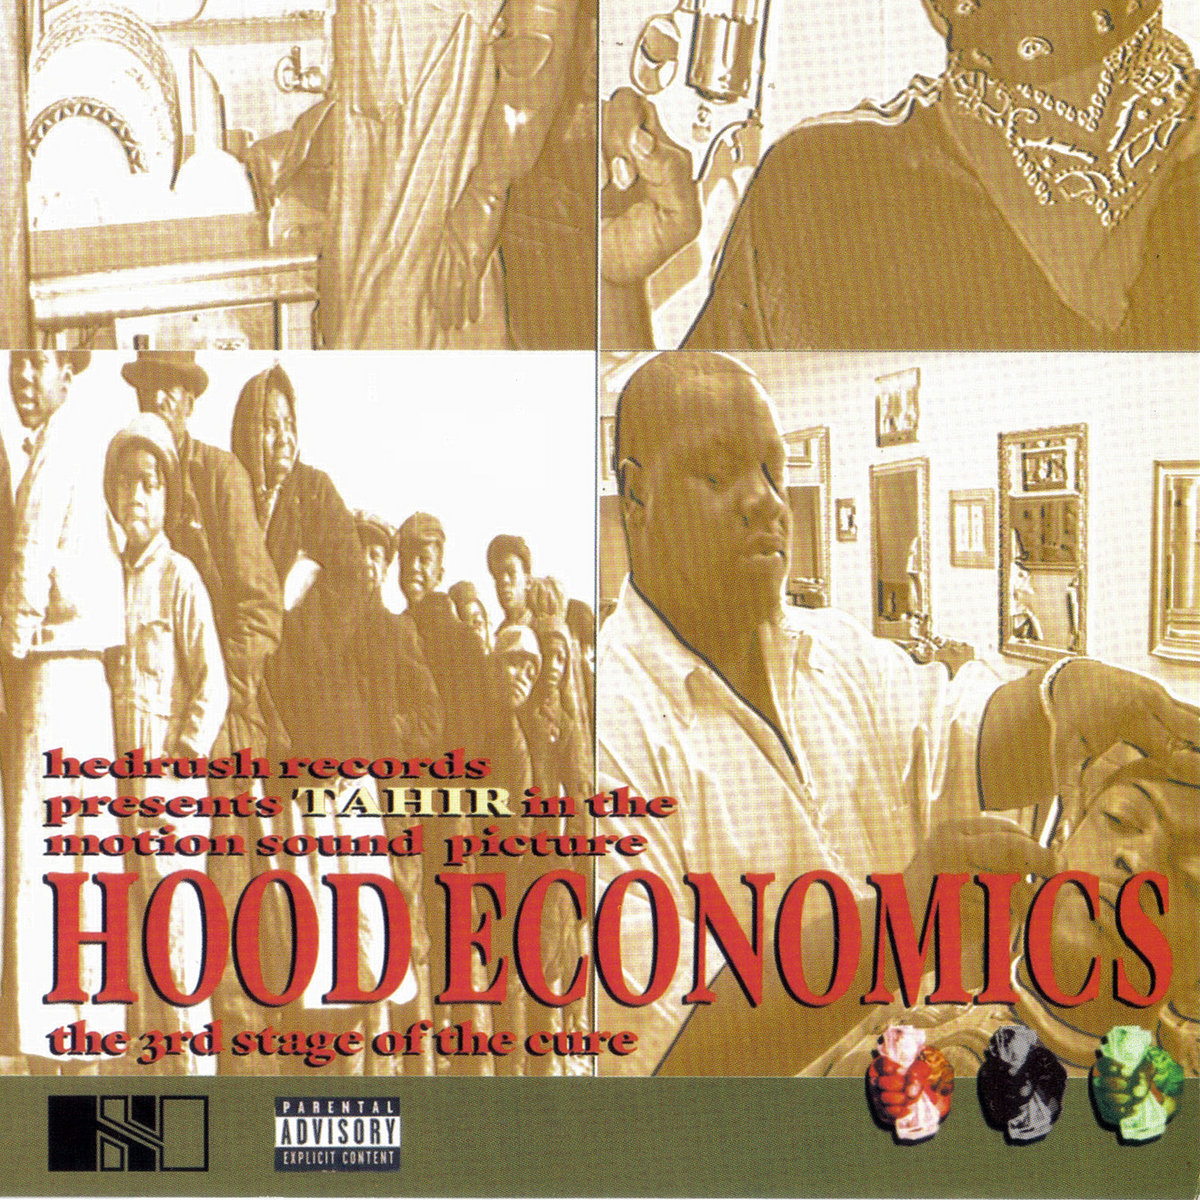 hood economics album cover